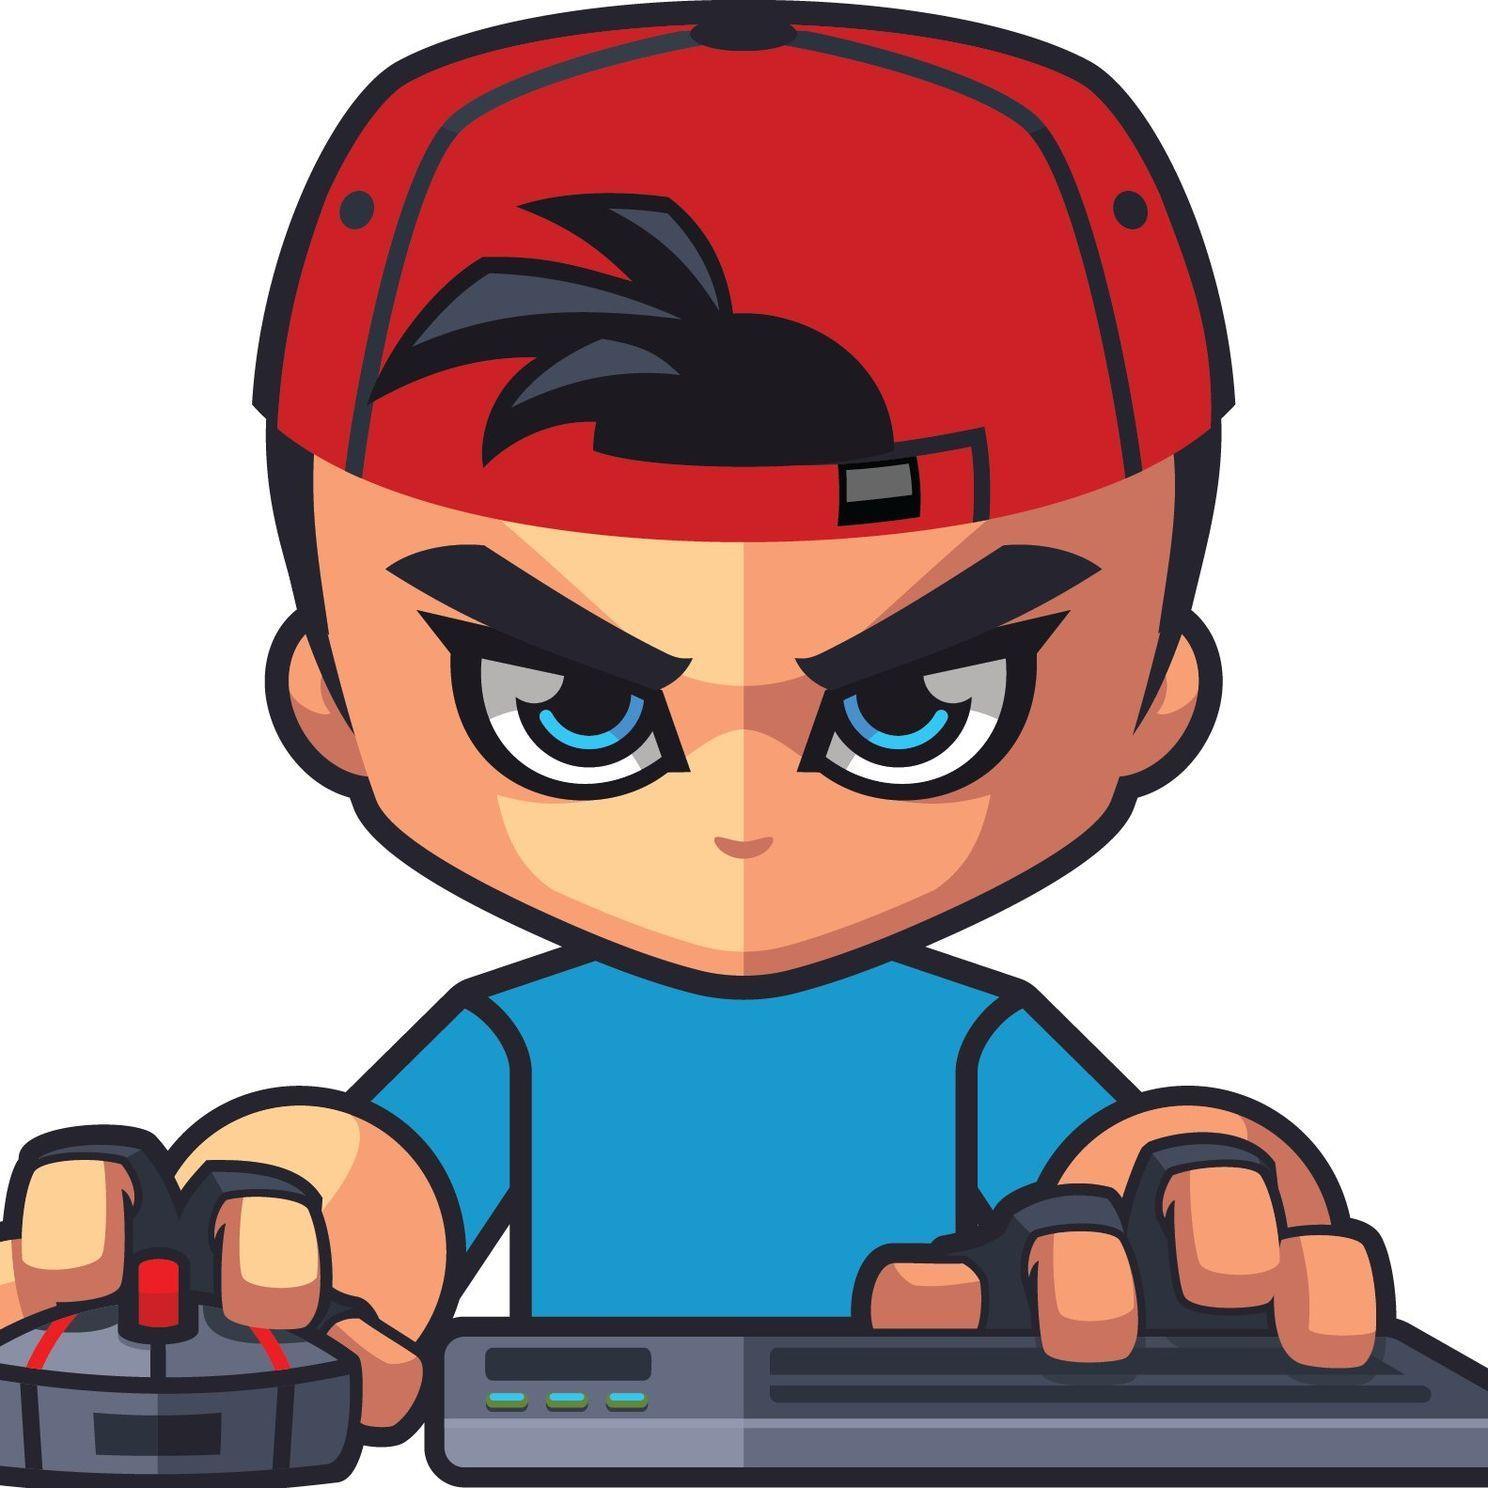 Player Fonni1 avatar